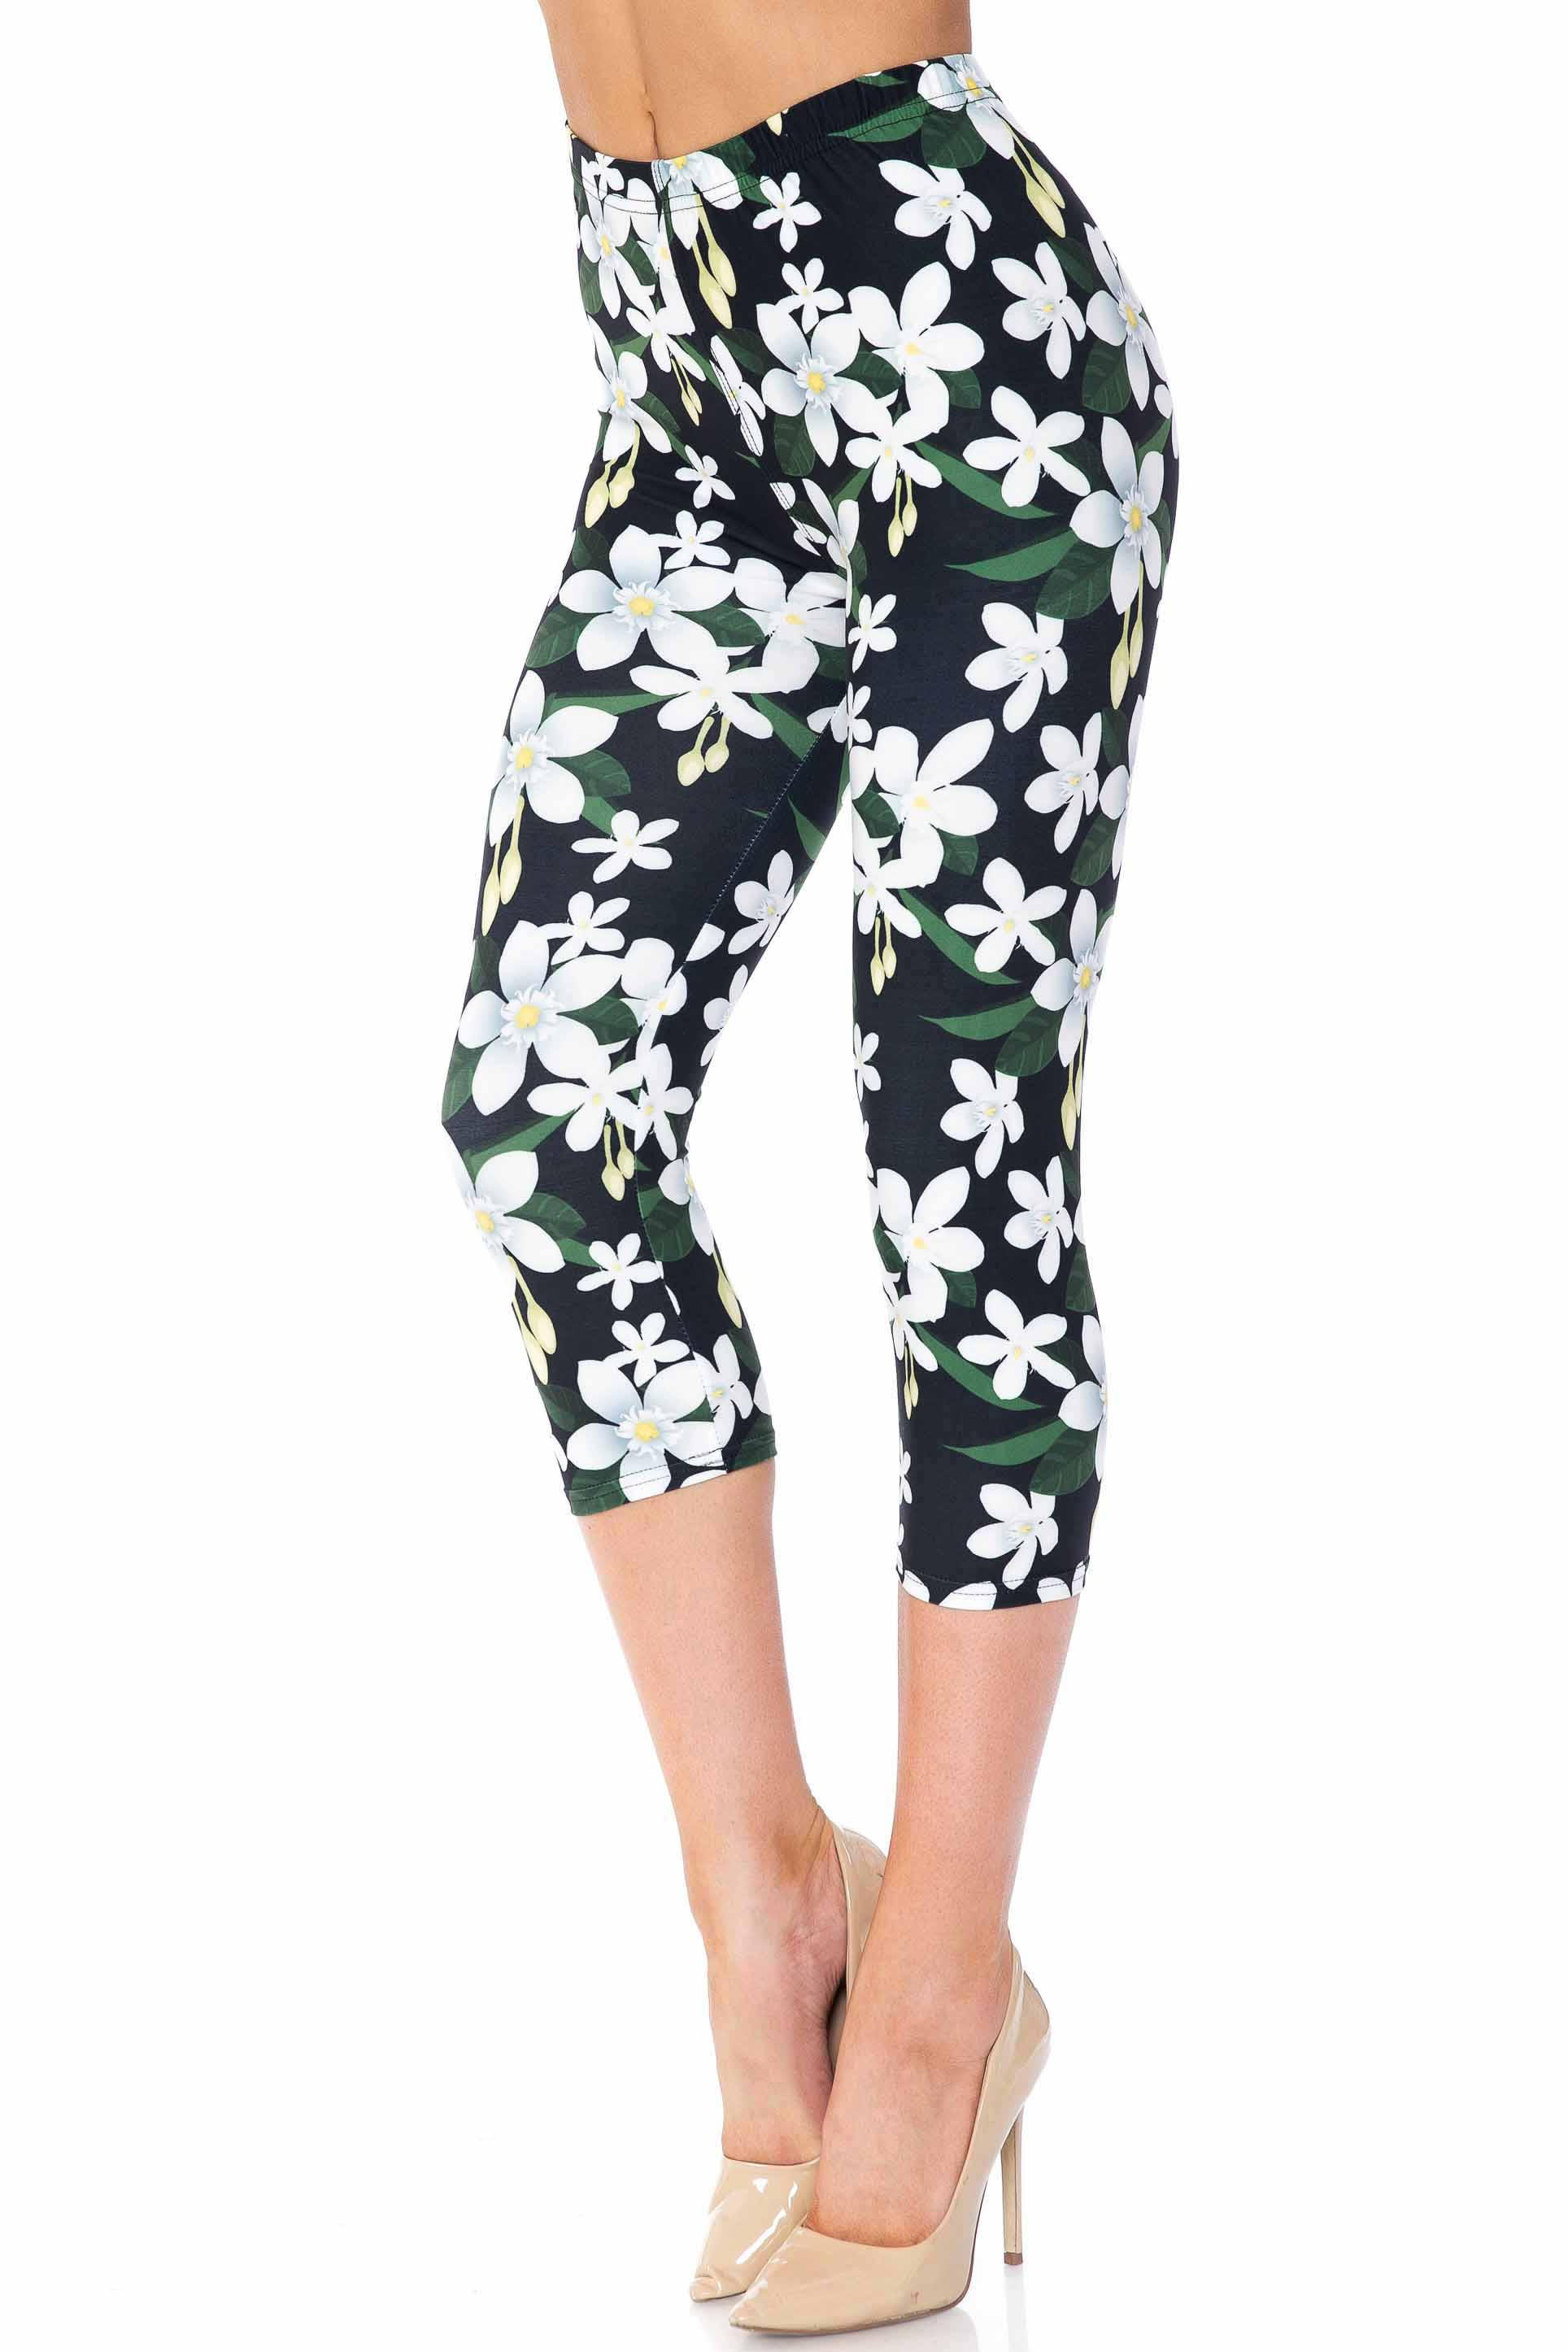 Wholesale Creamy Soft Daisy Bloom Capris - USA Fashion™ | Leggings Wholesale  Superstore